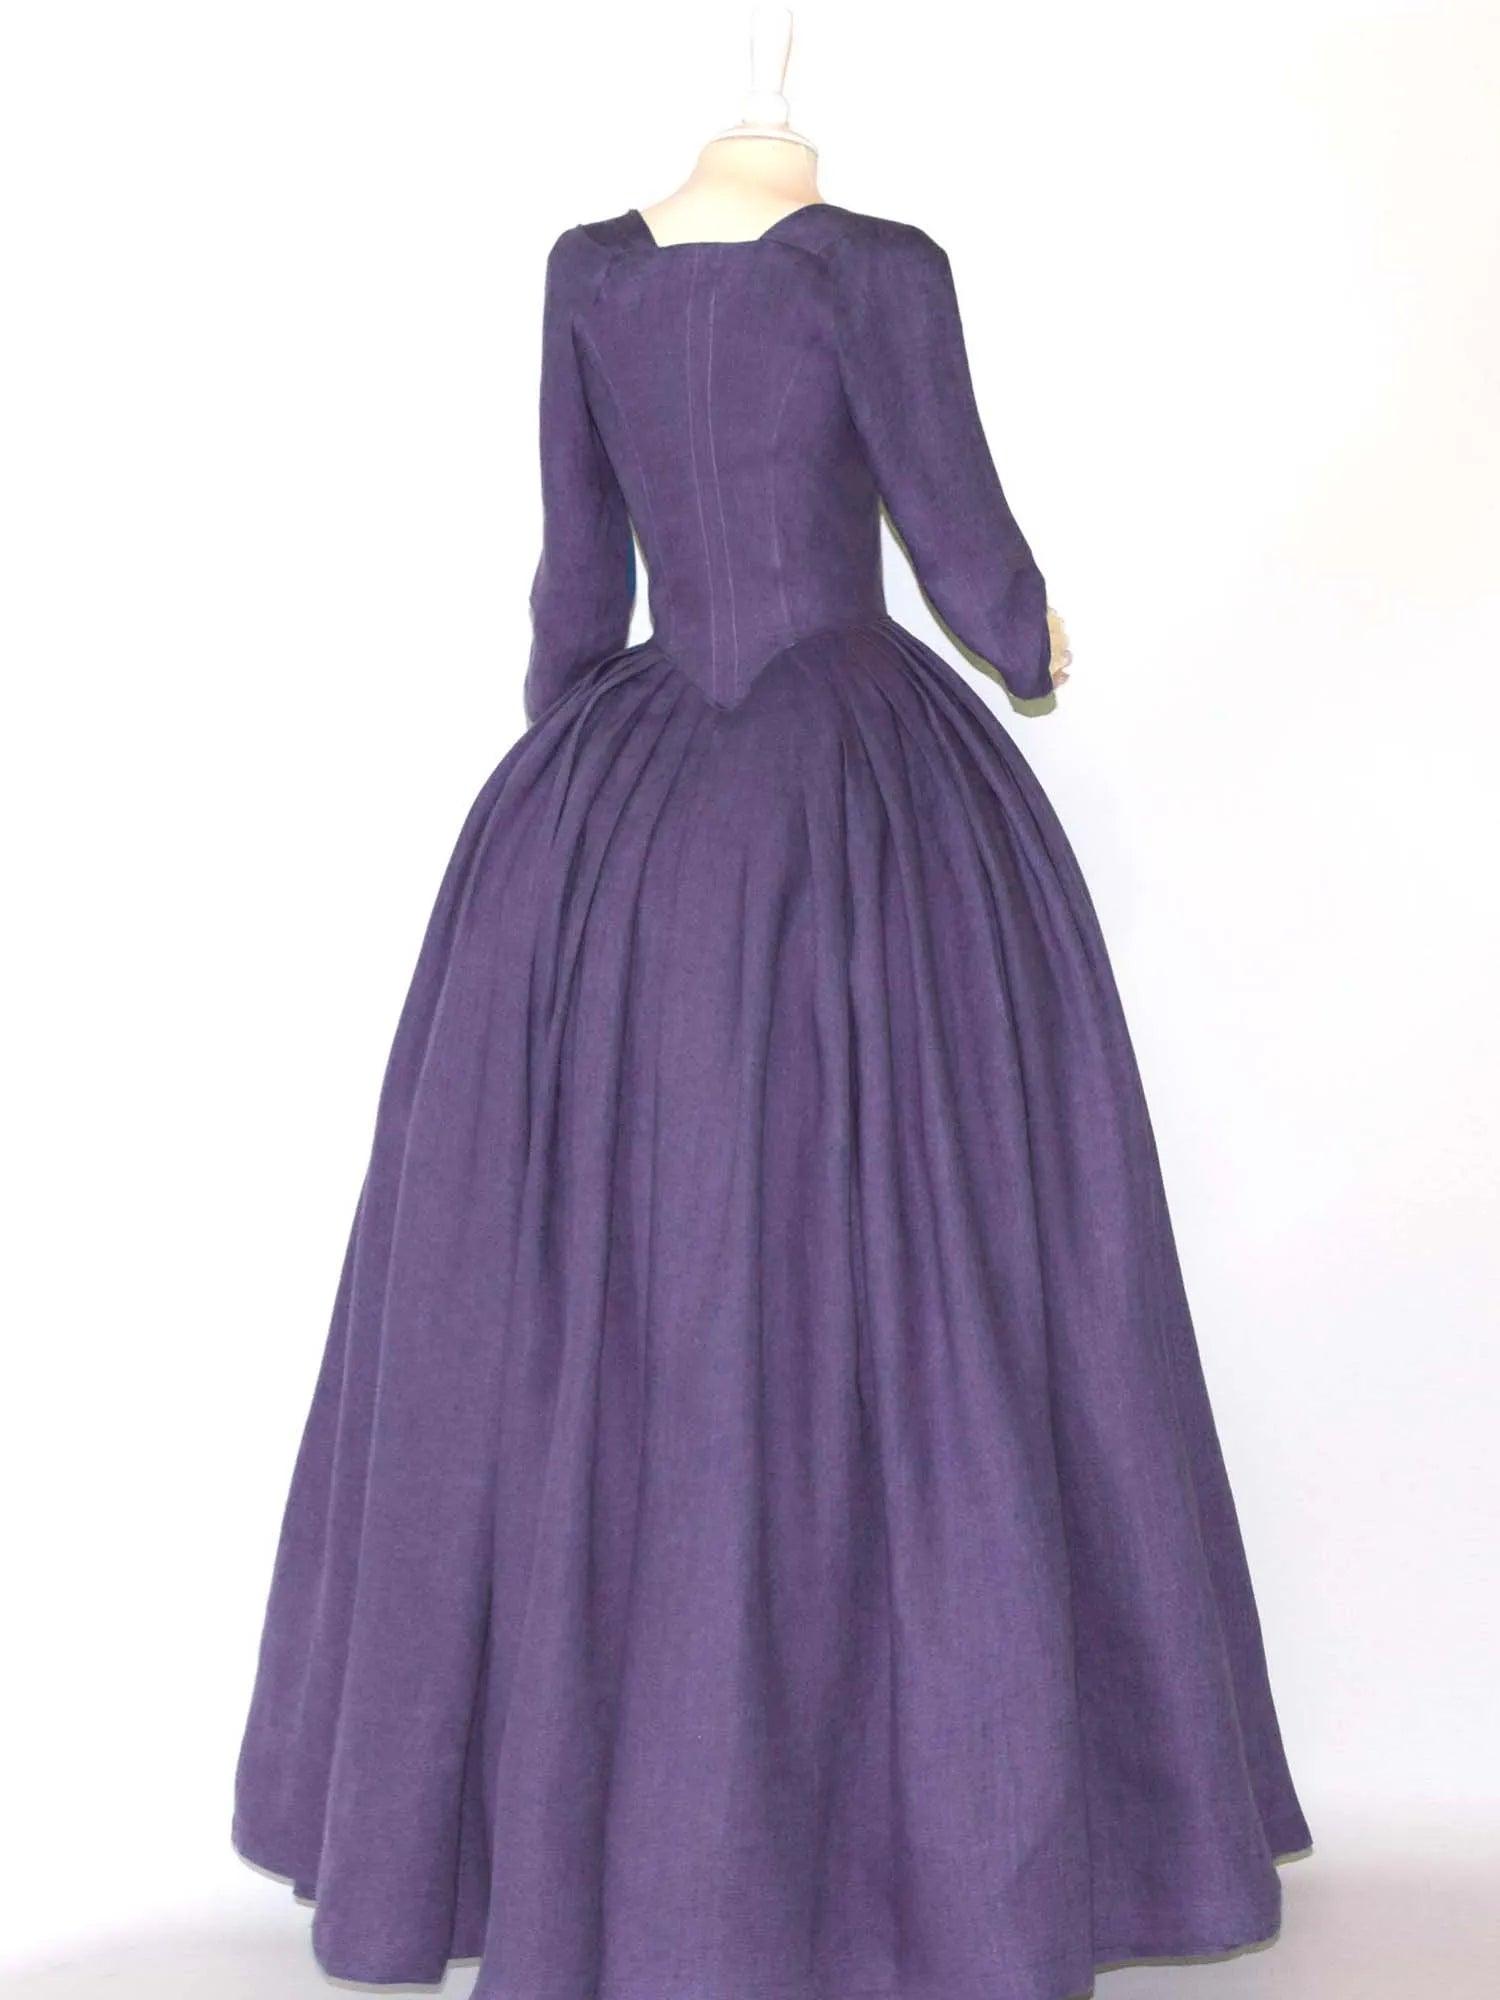 18th Century Overdress in Purple Linen & Skirt - Atelier Serraspina